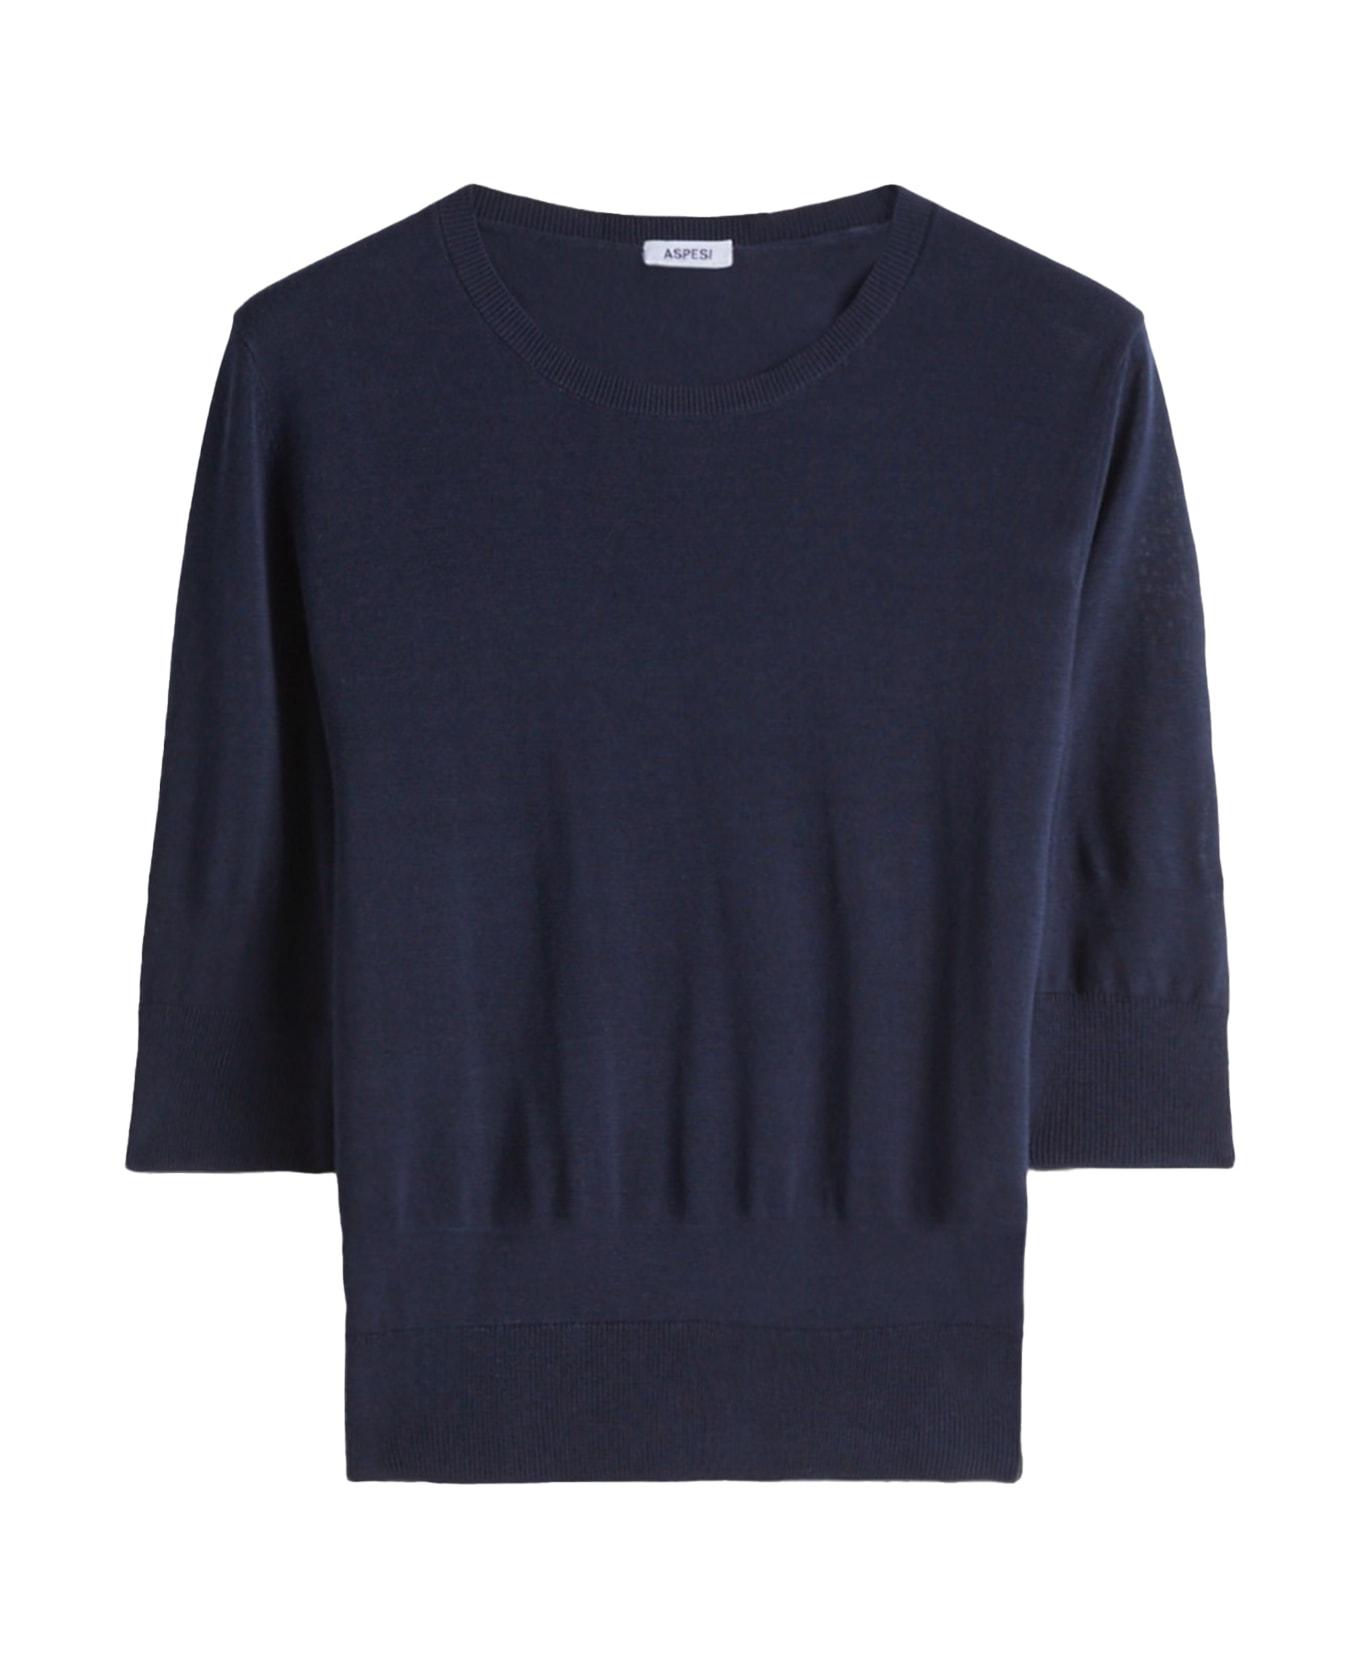 Aspesi Blue 3/4 Sleeve Shirt - NAVY